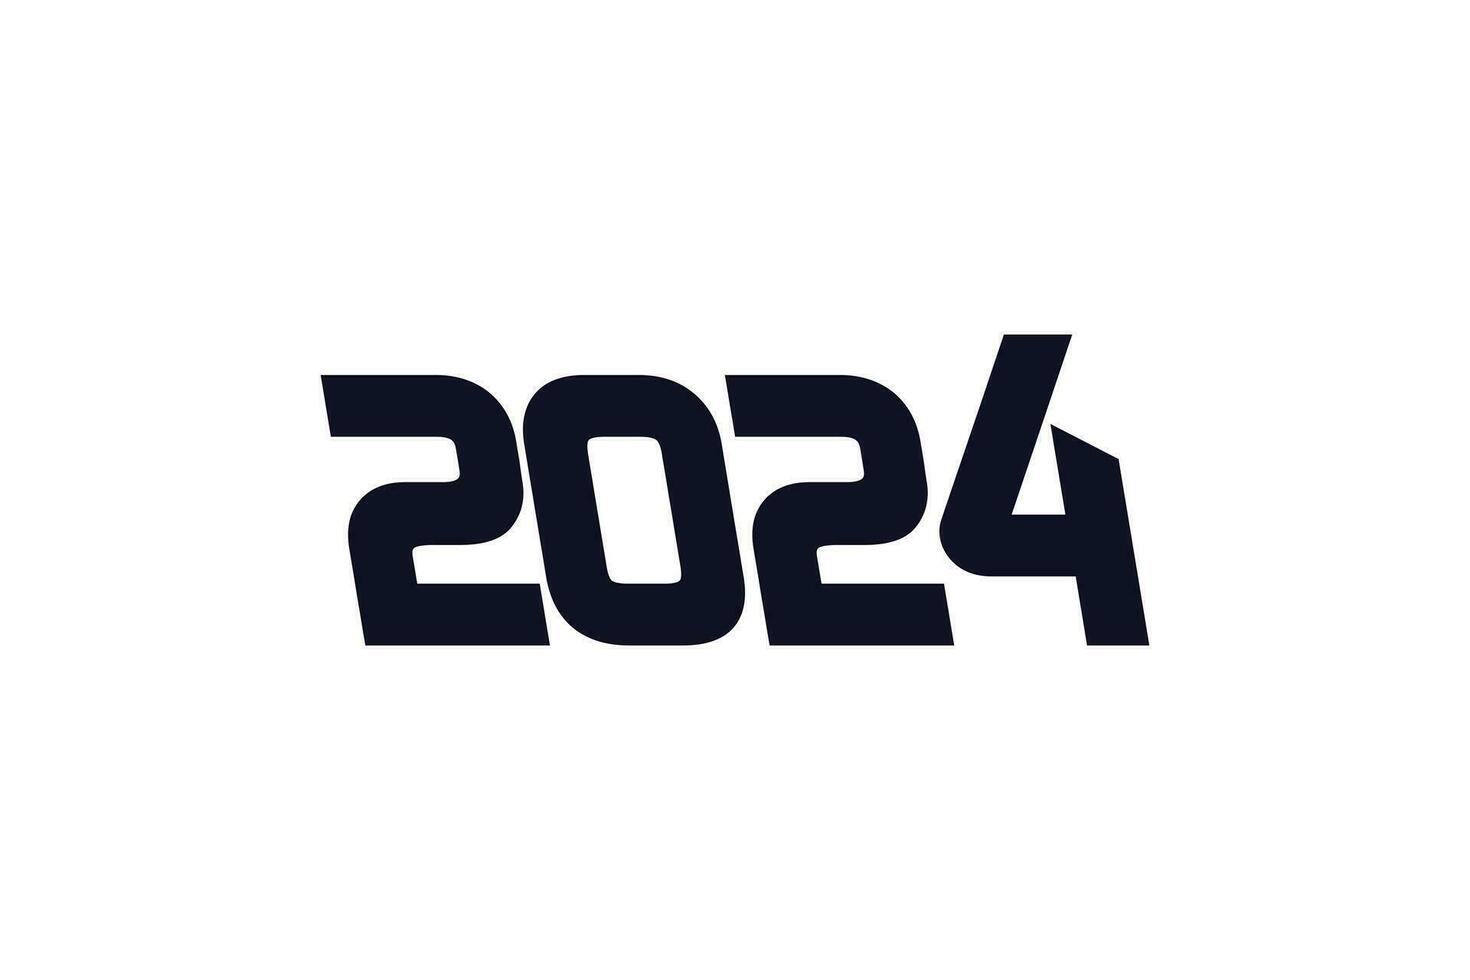 2024 logo design vector with creative unique idea